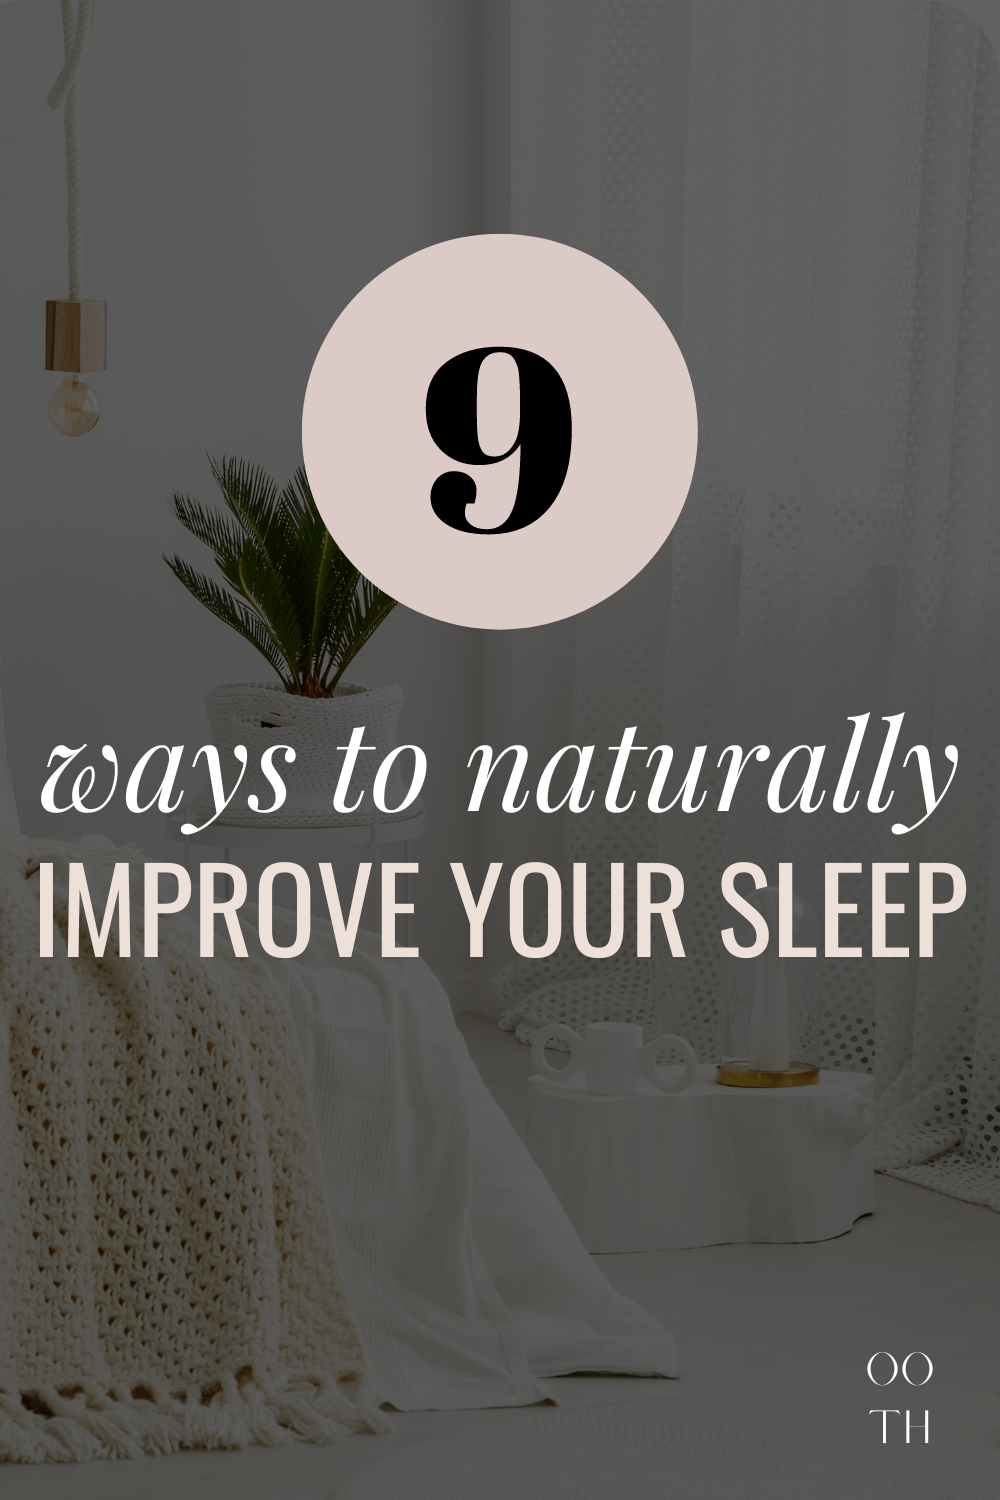 how to sleep better, how to fall asleep faster, how to naturally improve sleep, better sleep tips, fall asleep fast